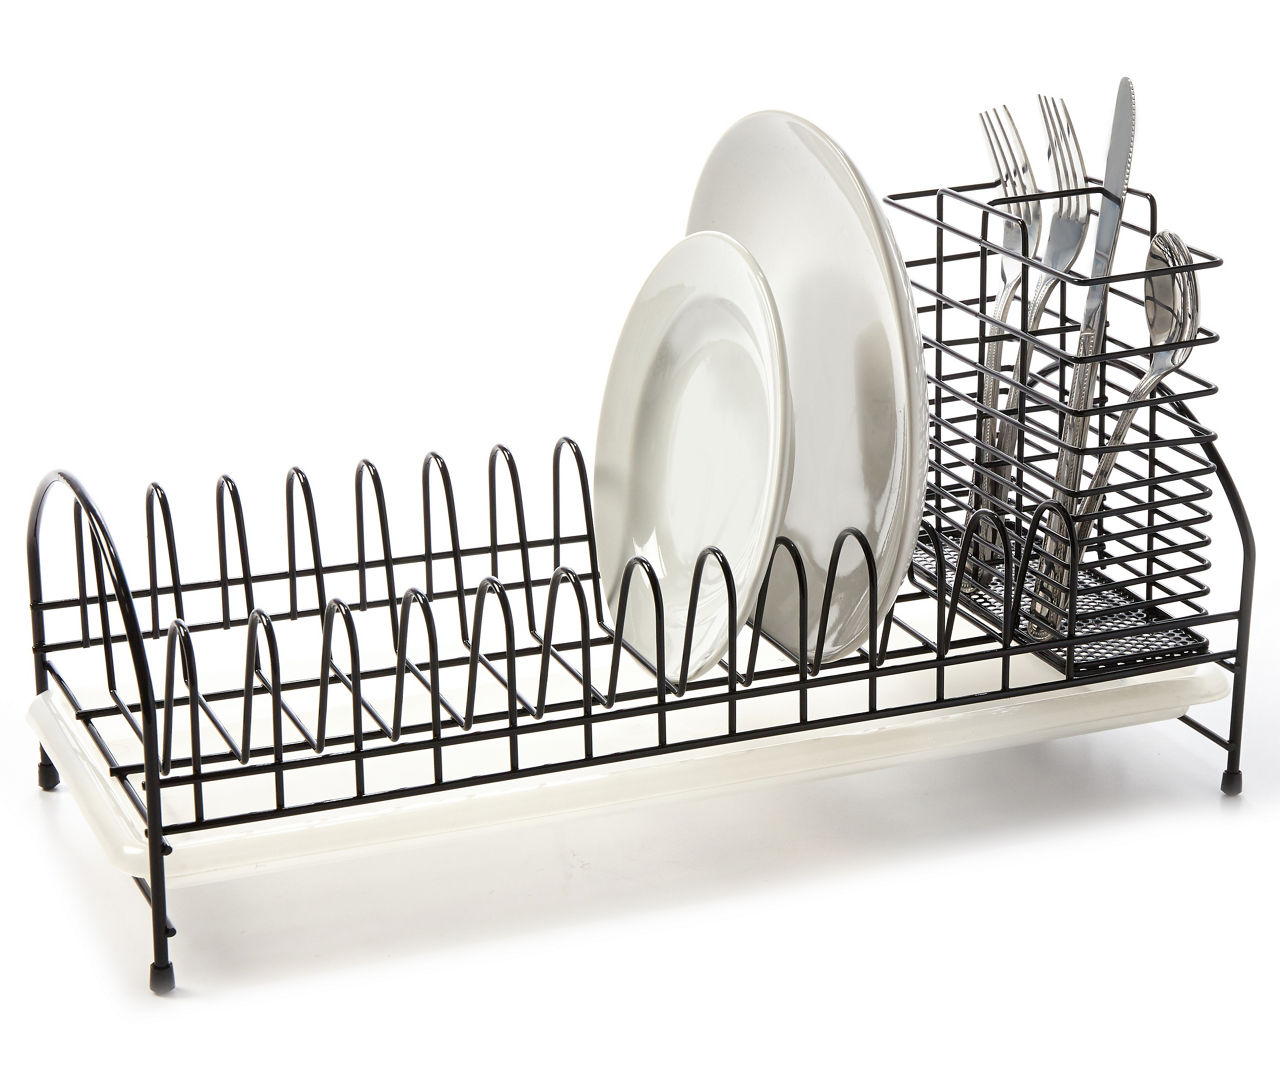 Metallic kitchen dish drying rack, kitchen dish